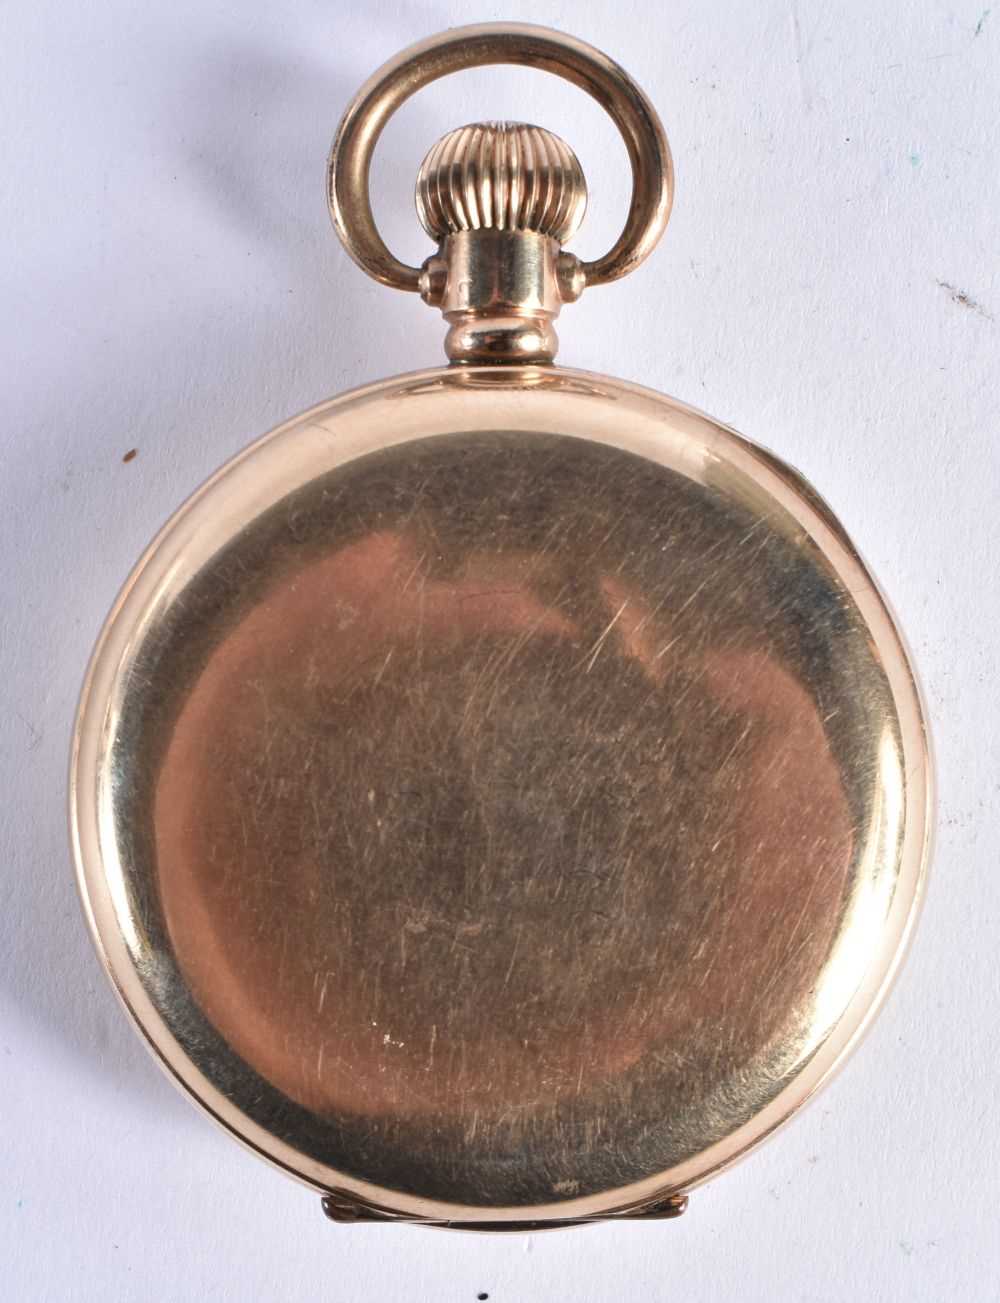 VERTEX REVUE Gents Vintage Rolled Gold Open Face Pocket Watch Hand-wind Working. 5 cm diameter. - Image 4 of 4